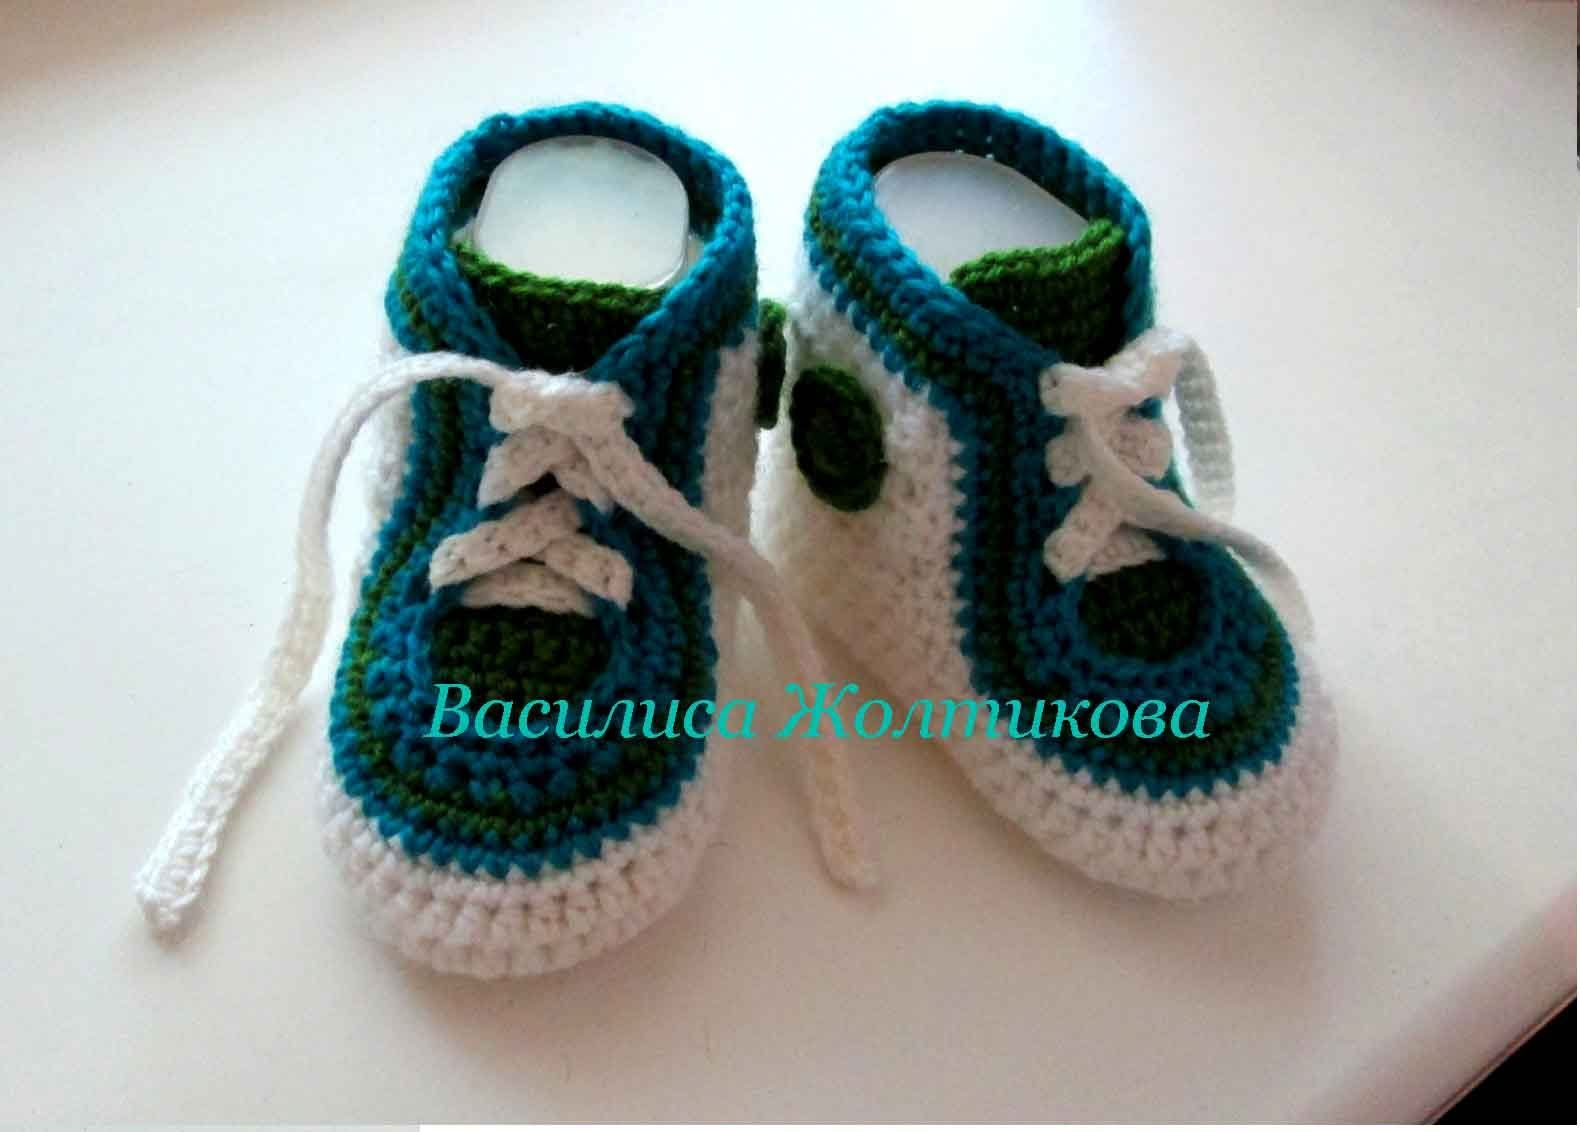 Baby Converse Crochet Pattern Crochet Ba Crochet Ba Converse Zapatillas